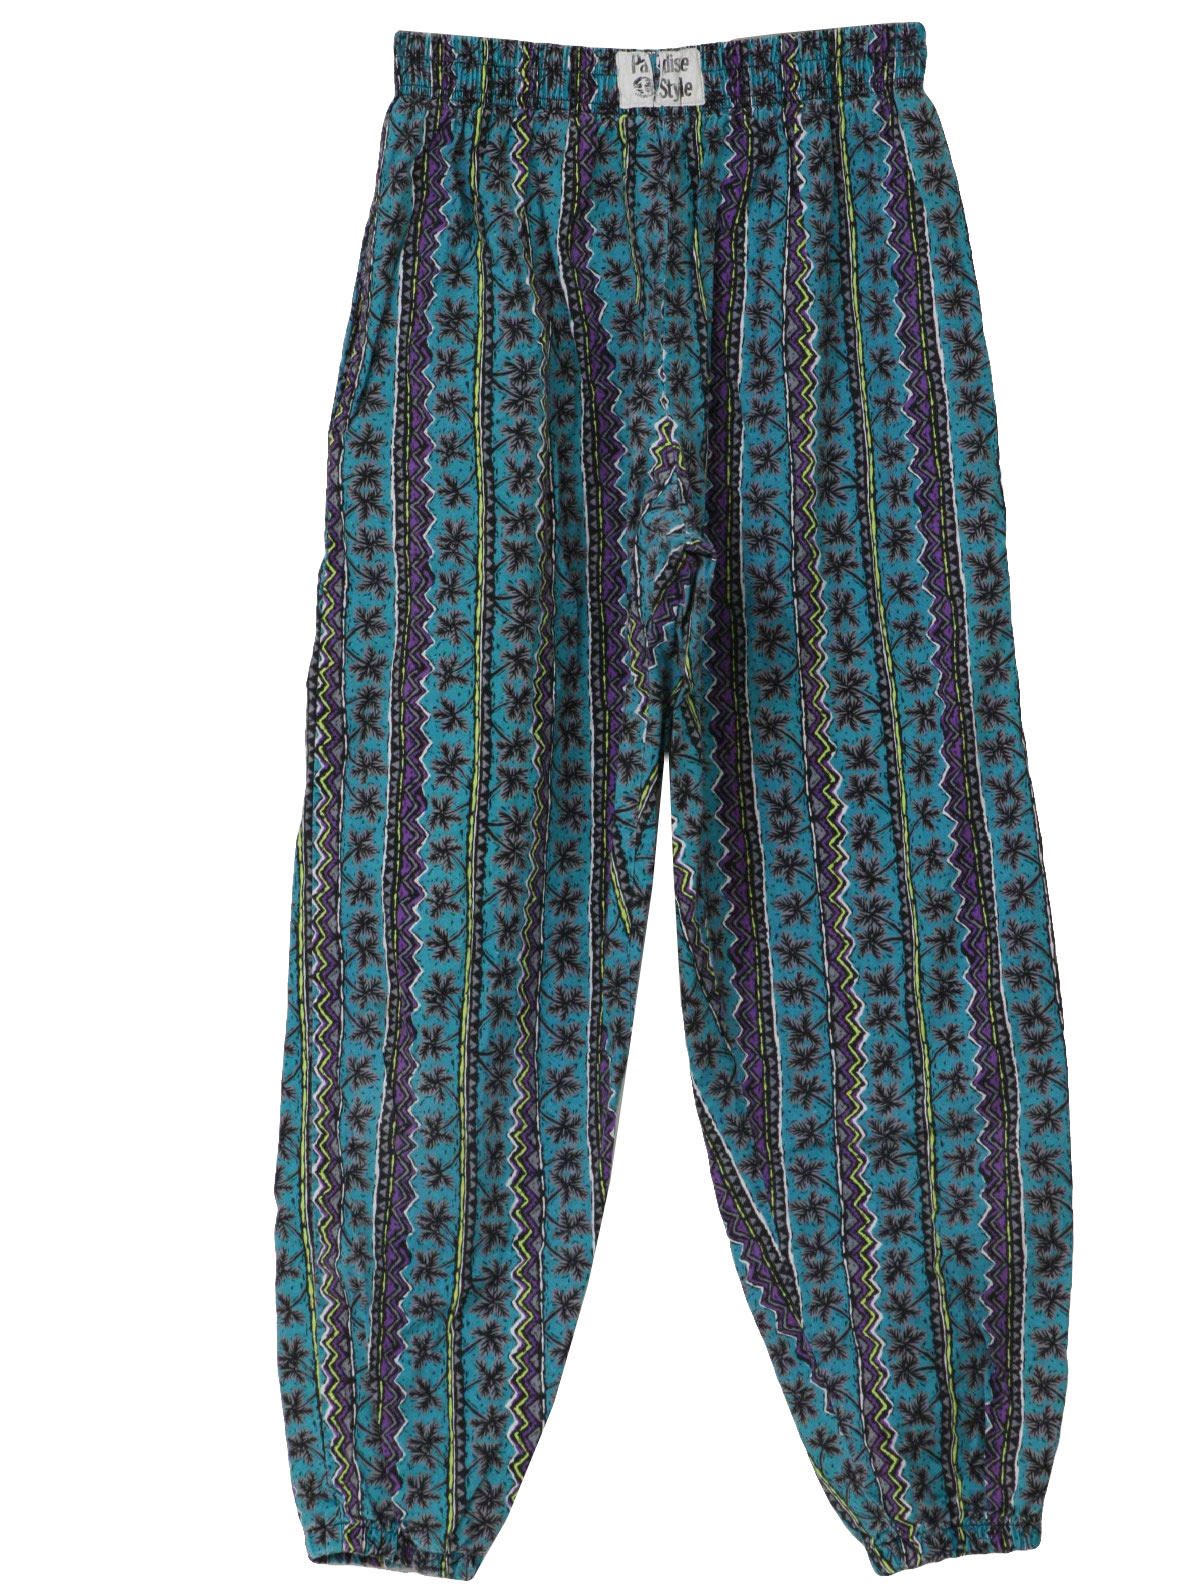 80s Style Pants Flash Sales - www.bridgepartnersllc.com 1692779094